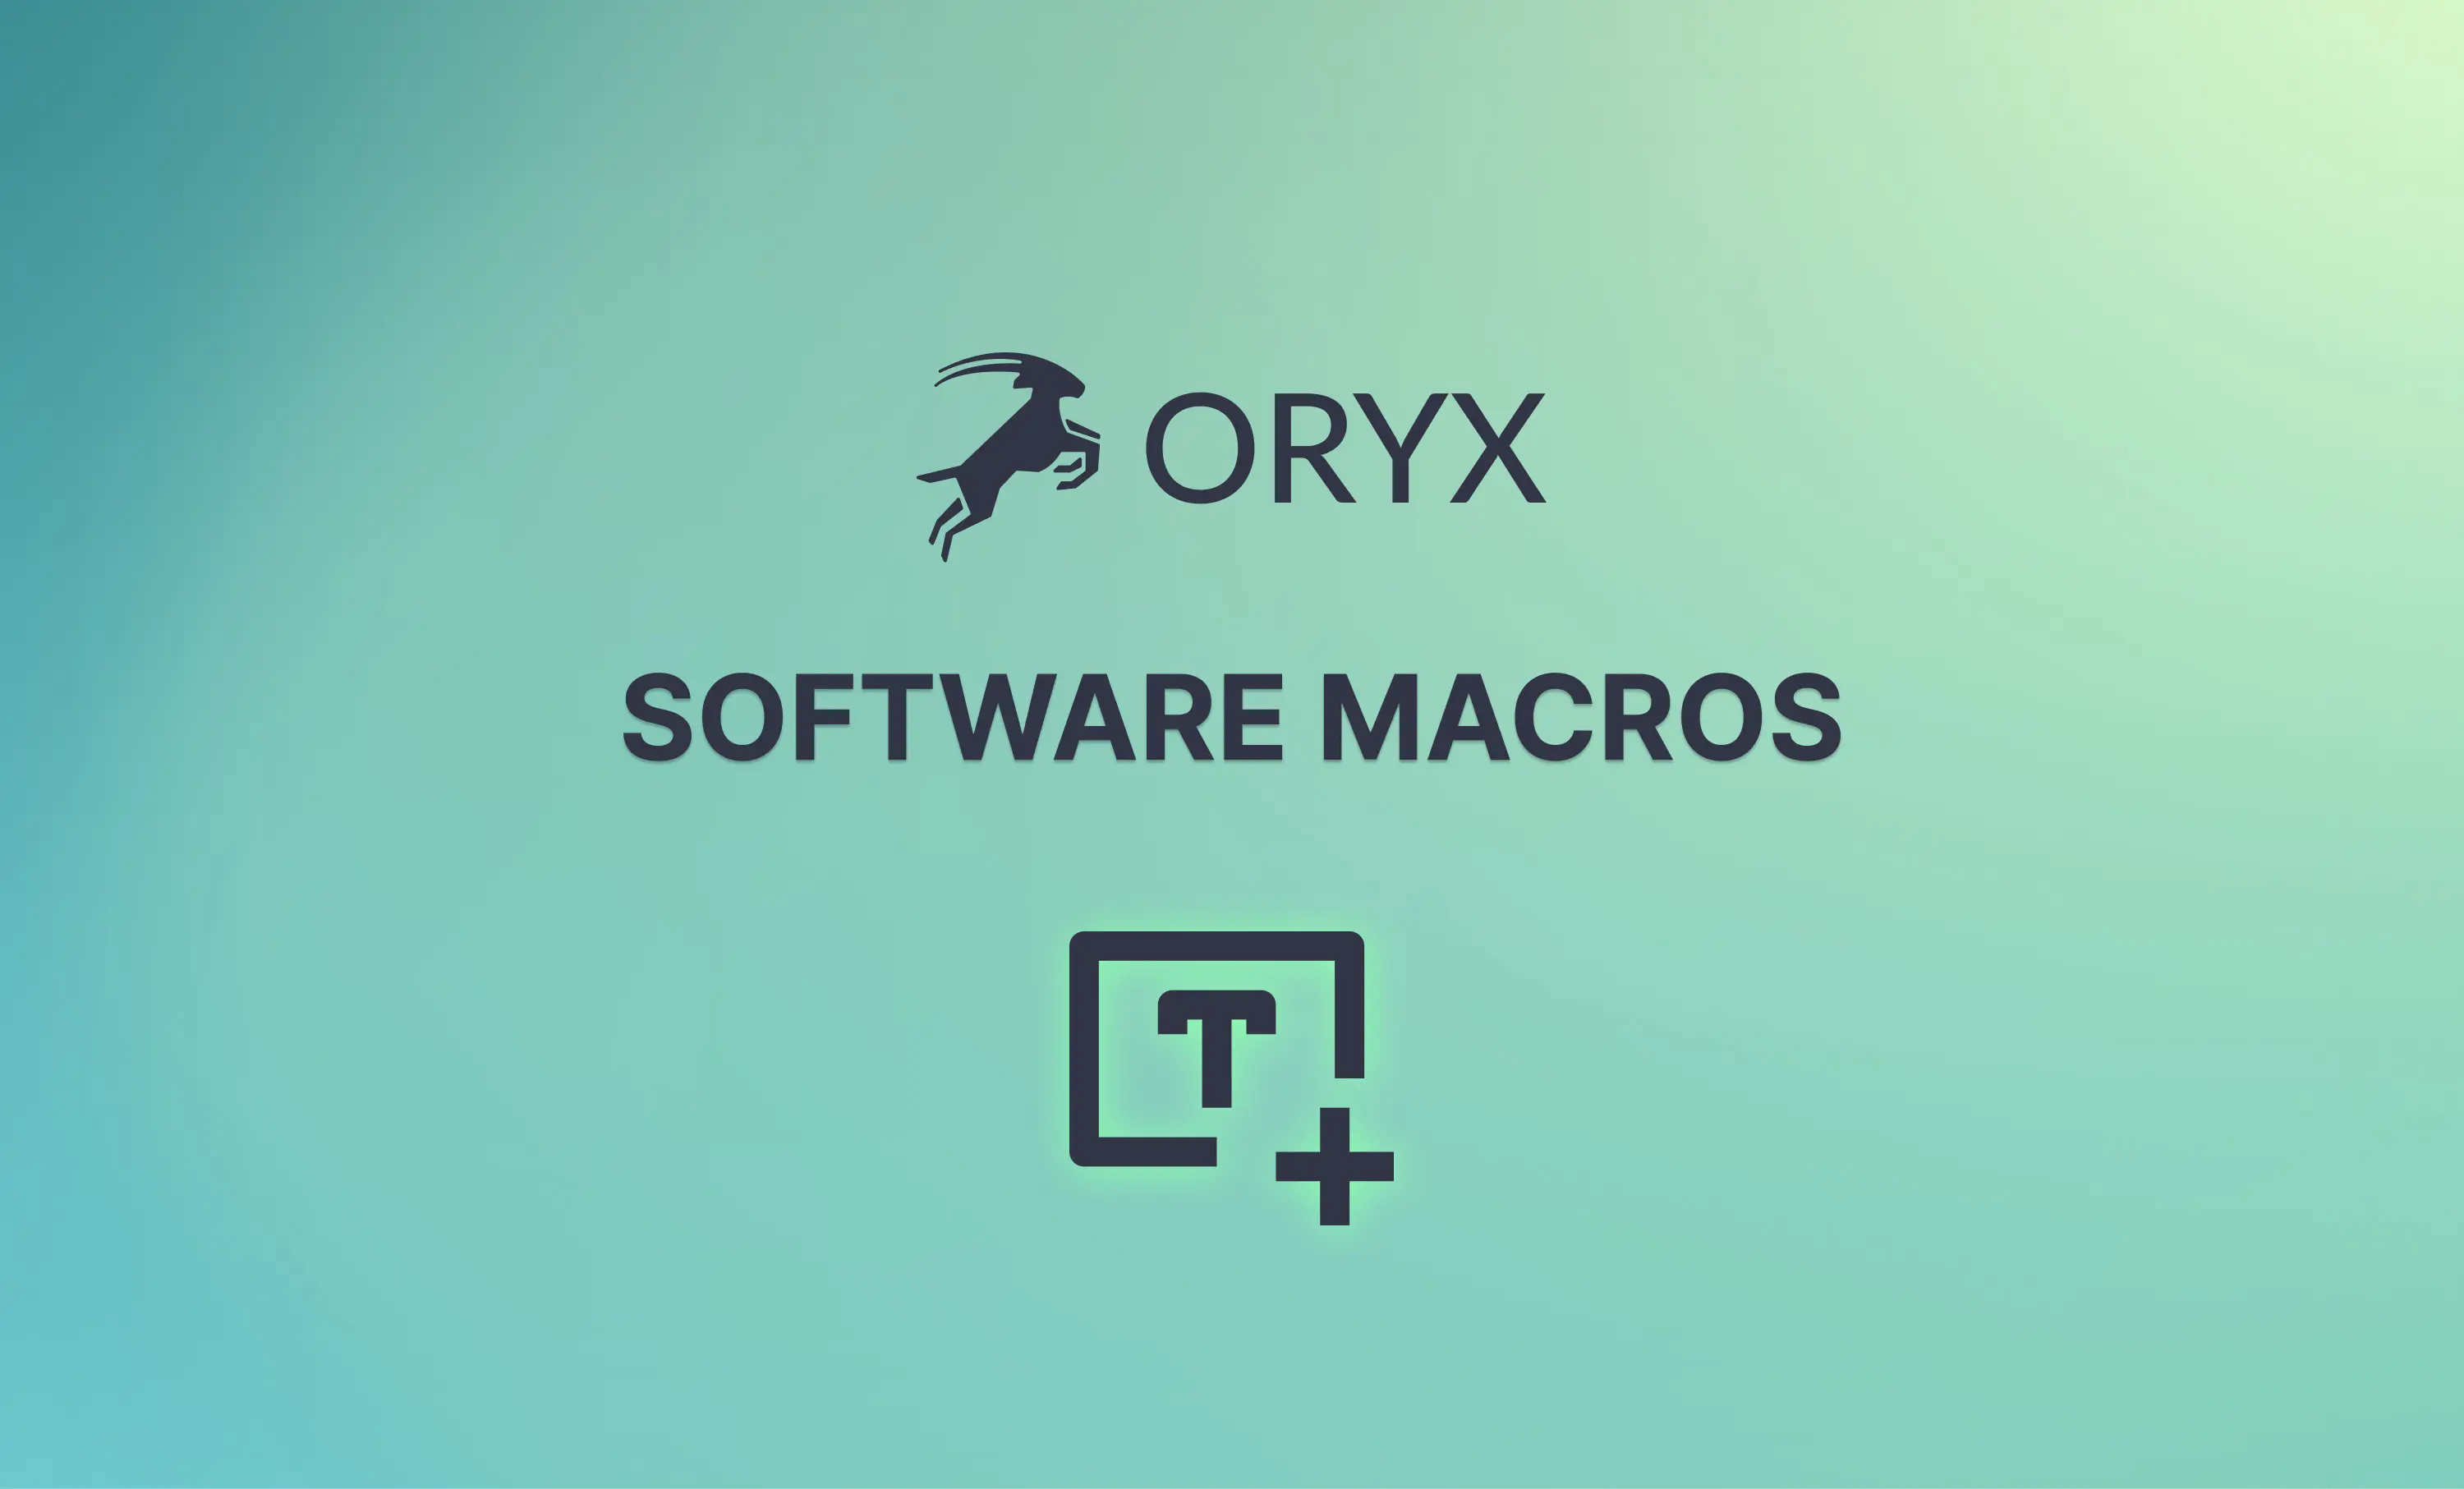 Oryx and long macros: A tutorial